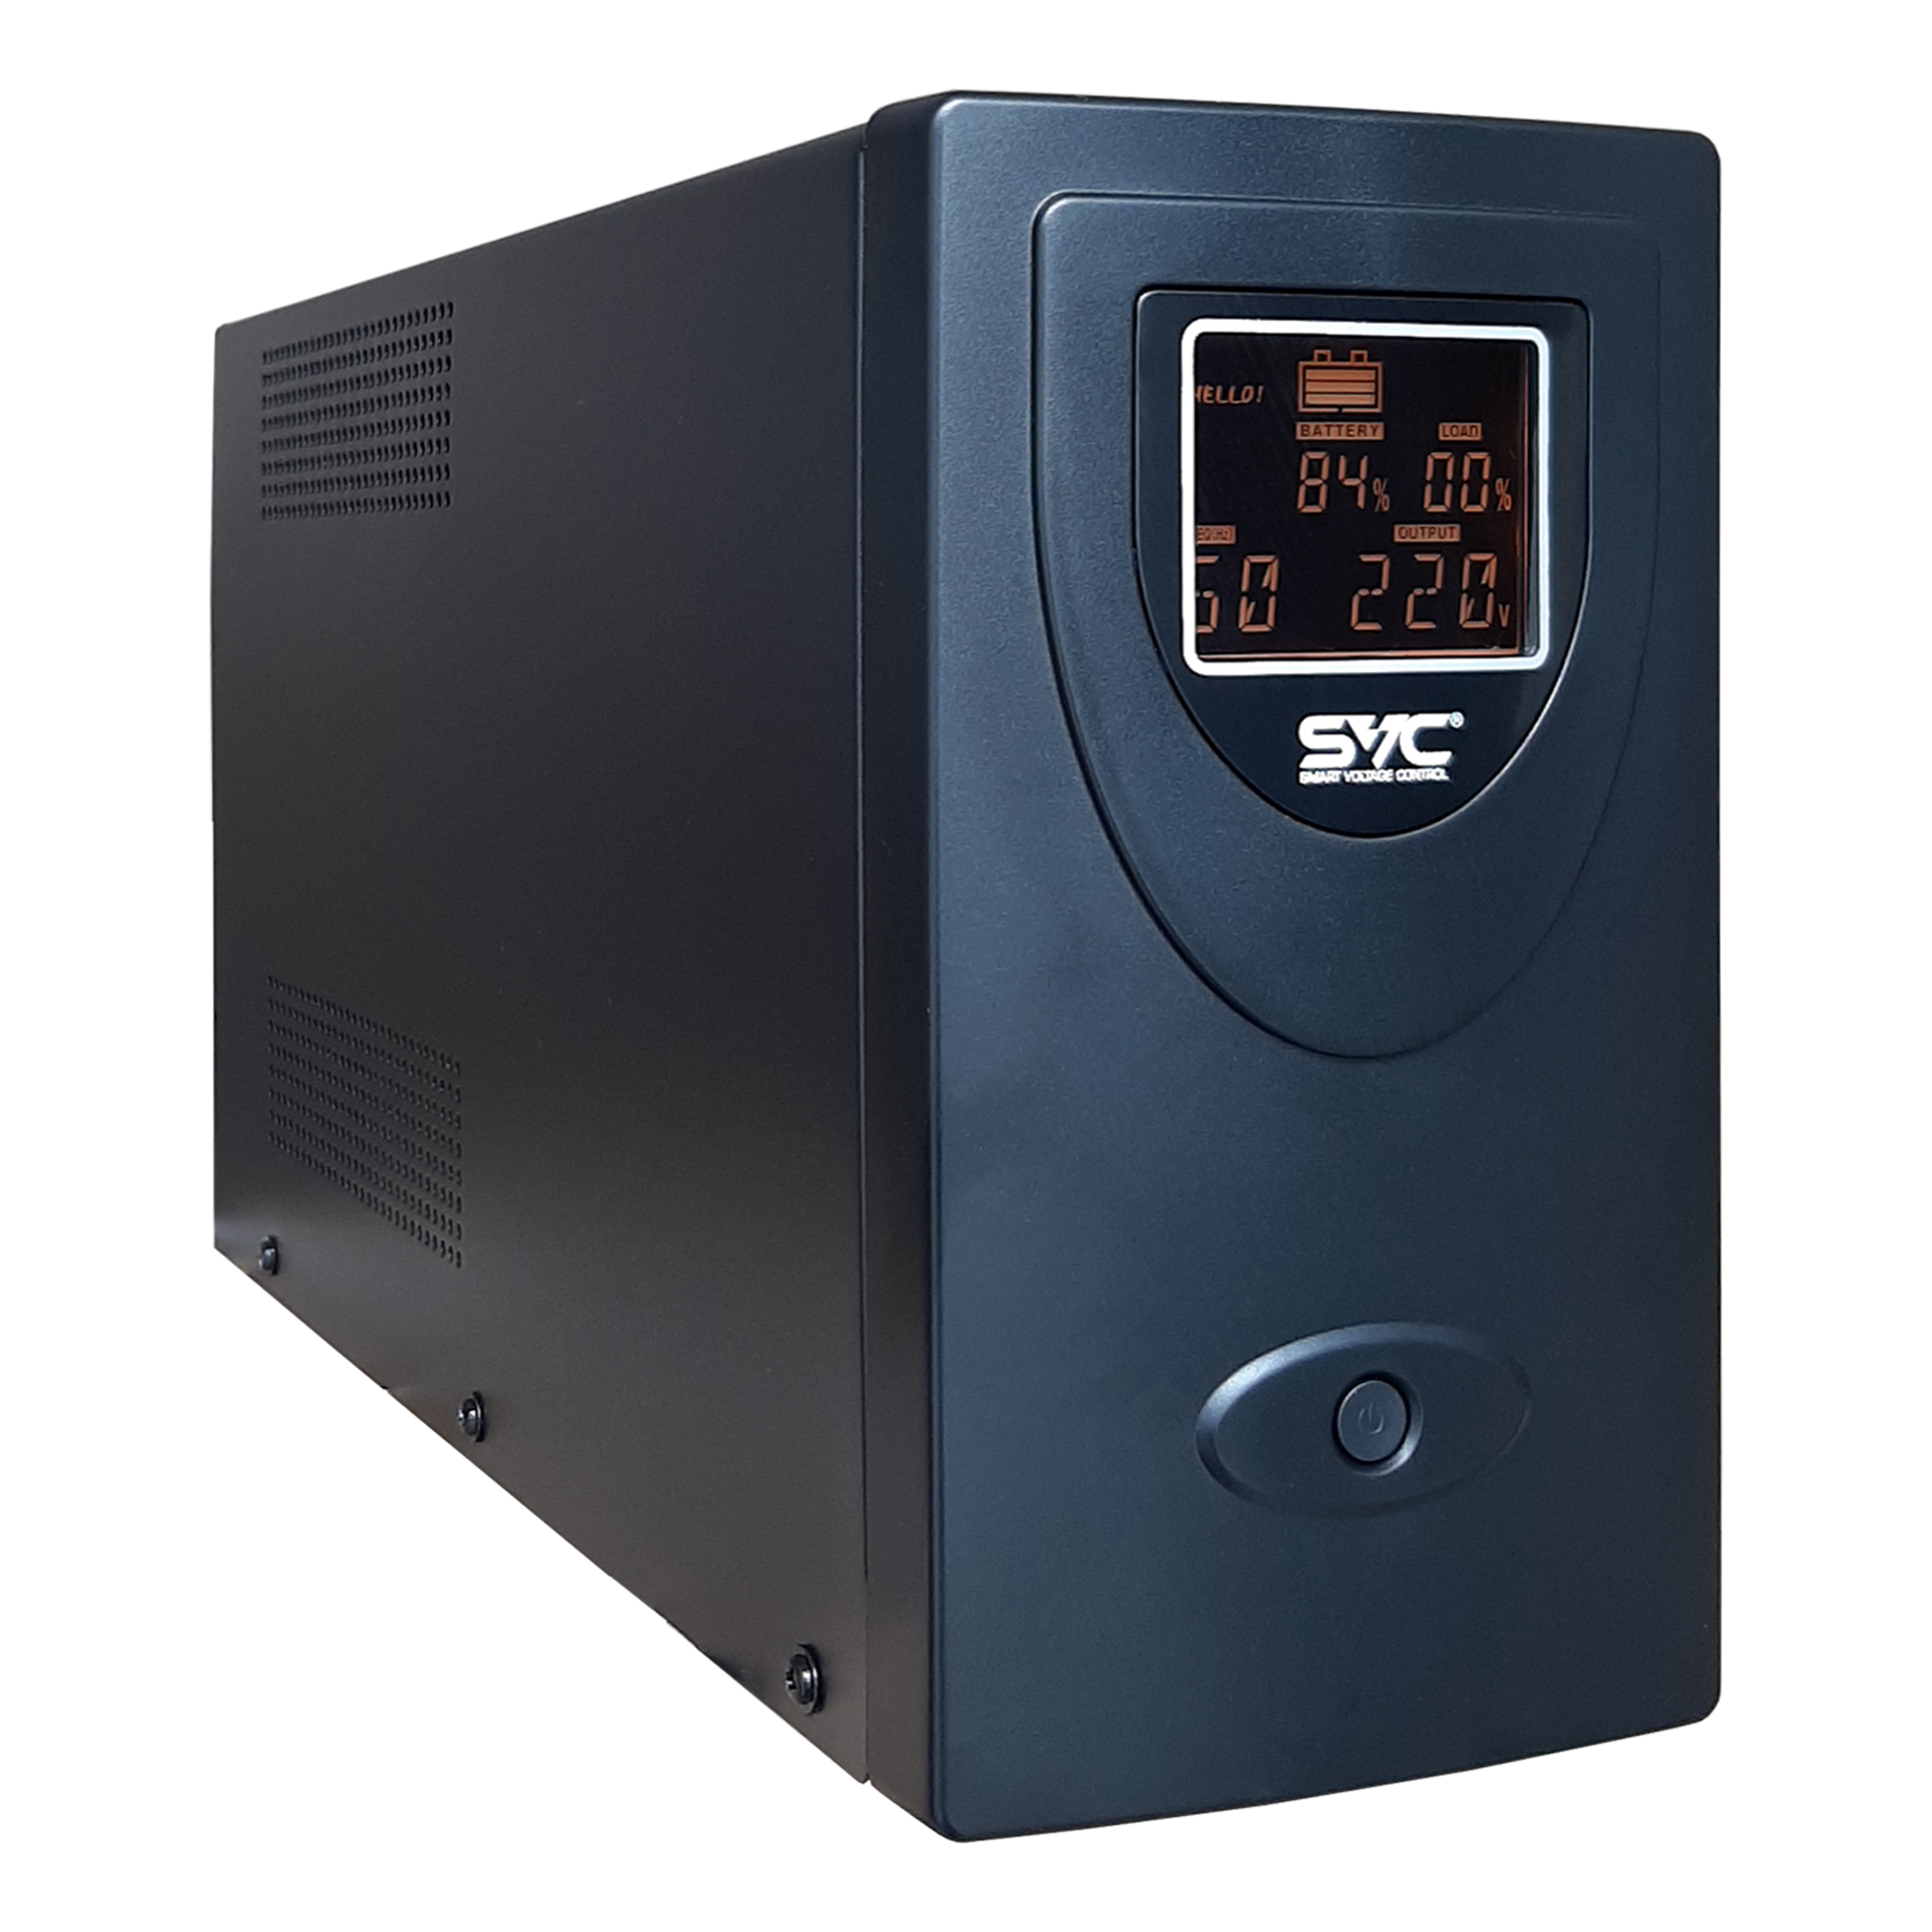 ИБП SVC V-2000-R-LCD/4SC, 2000 В·А, 1.2 кВт, EURO, розеток - 2, USB, черный (V-2000-R-LCD/4SC)